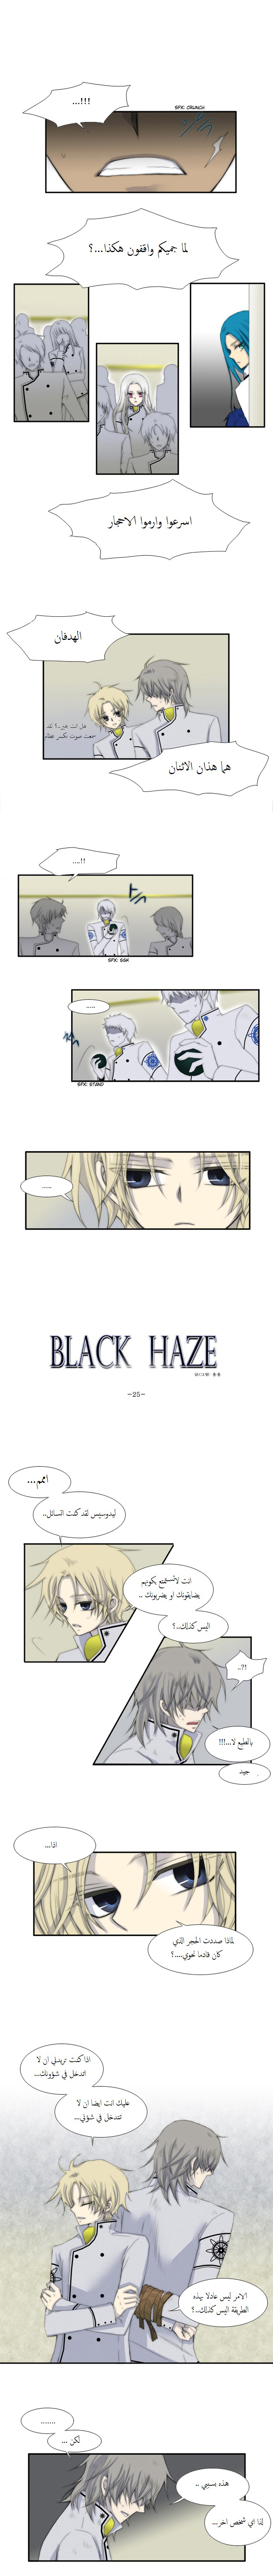 Black Haze: Chapter 25 - Page 1